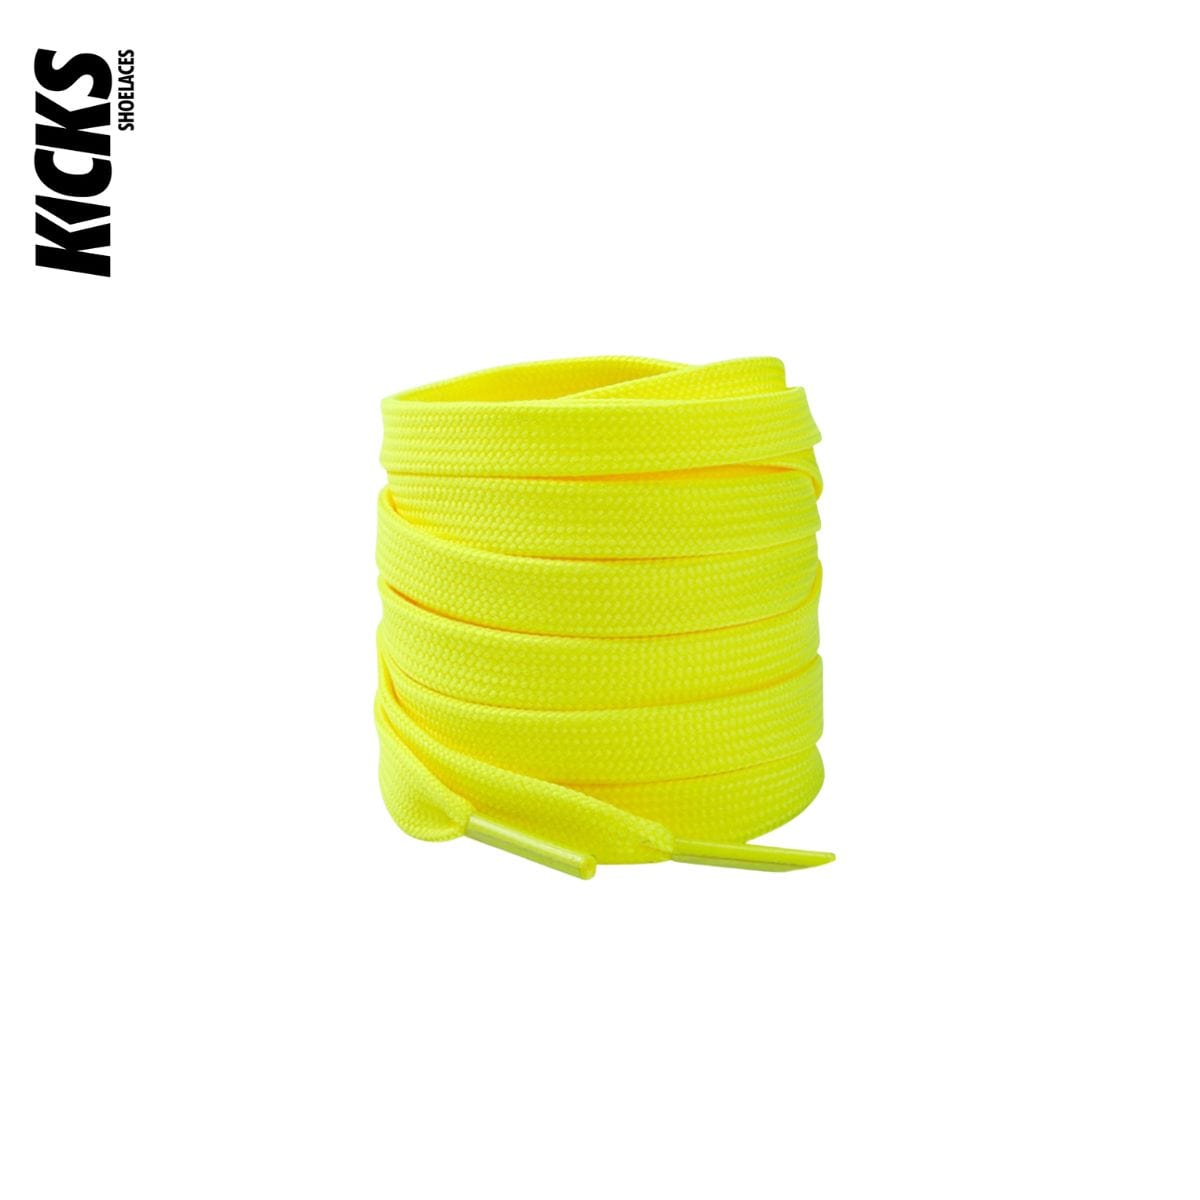 Yellow Nike Dunks Shoelace Replacements - Kicks Shoelaces